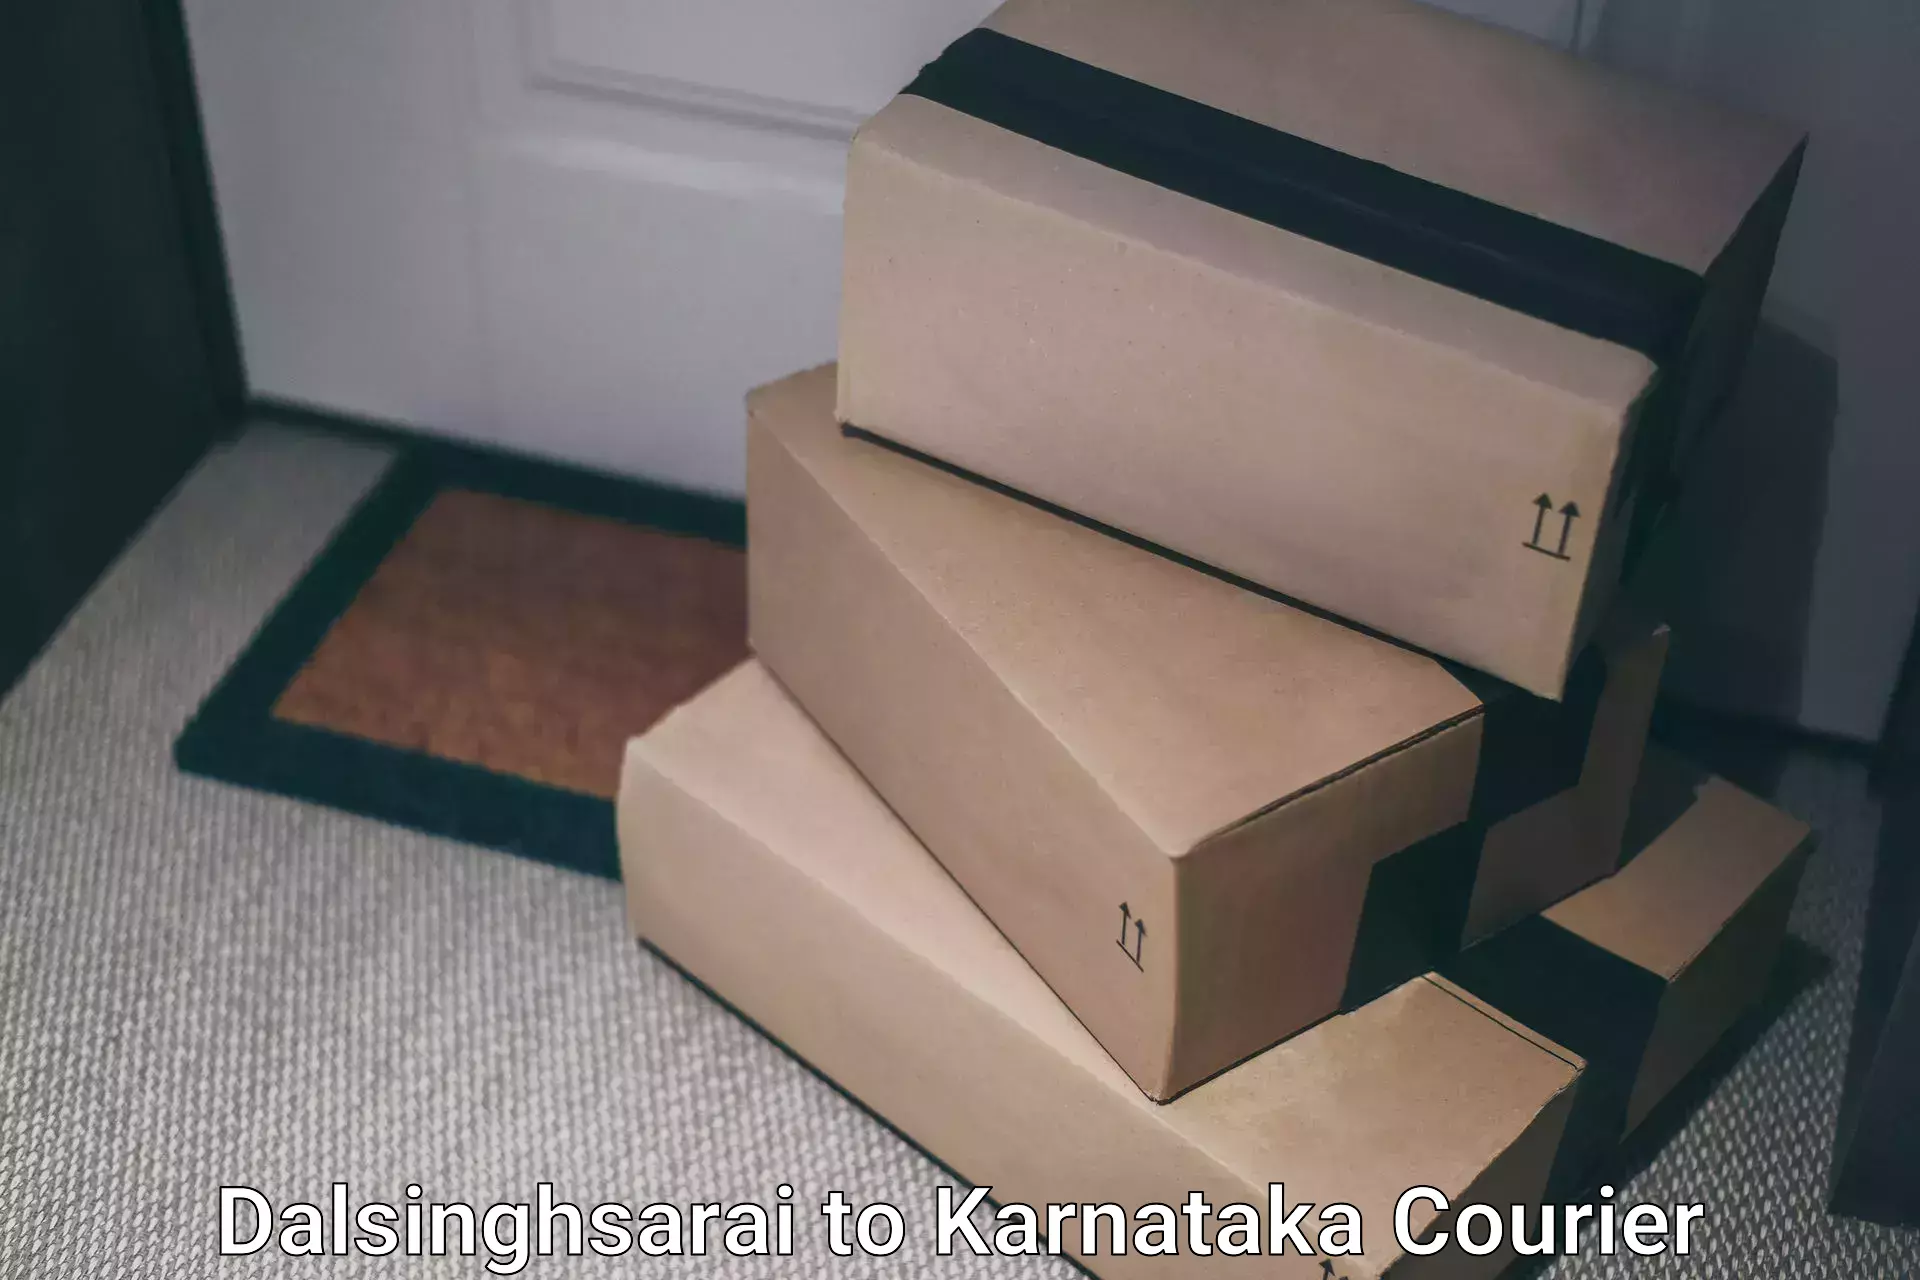 Parcel delivery in Dalsinghsarai to Karnataka